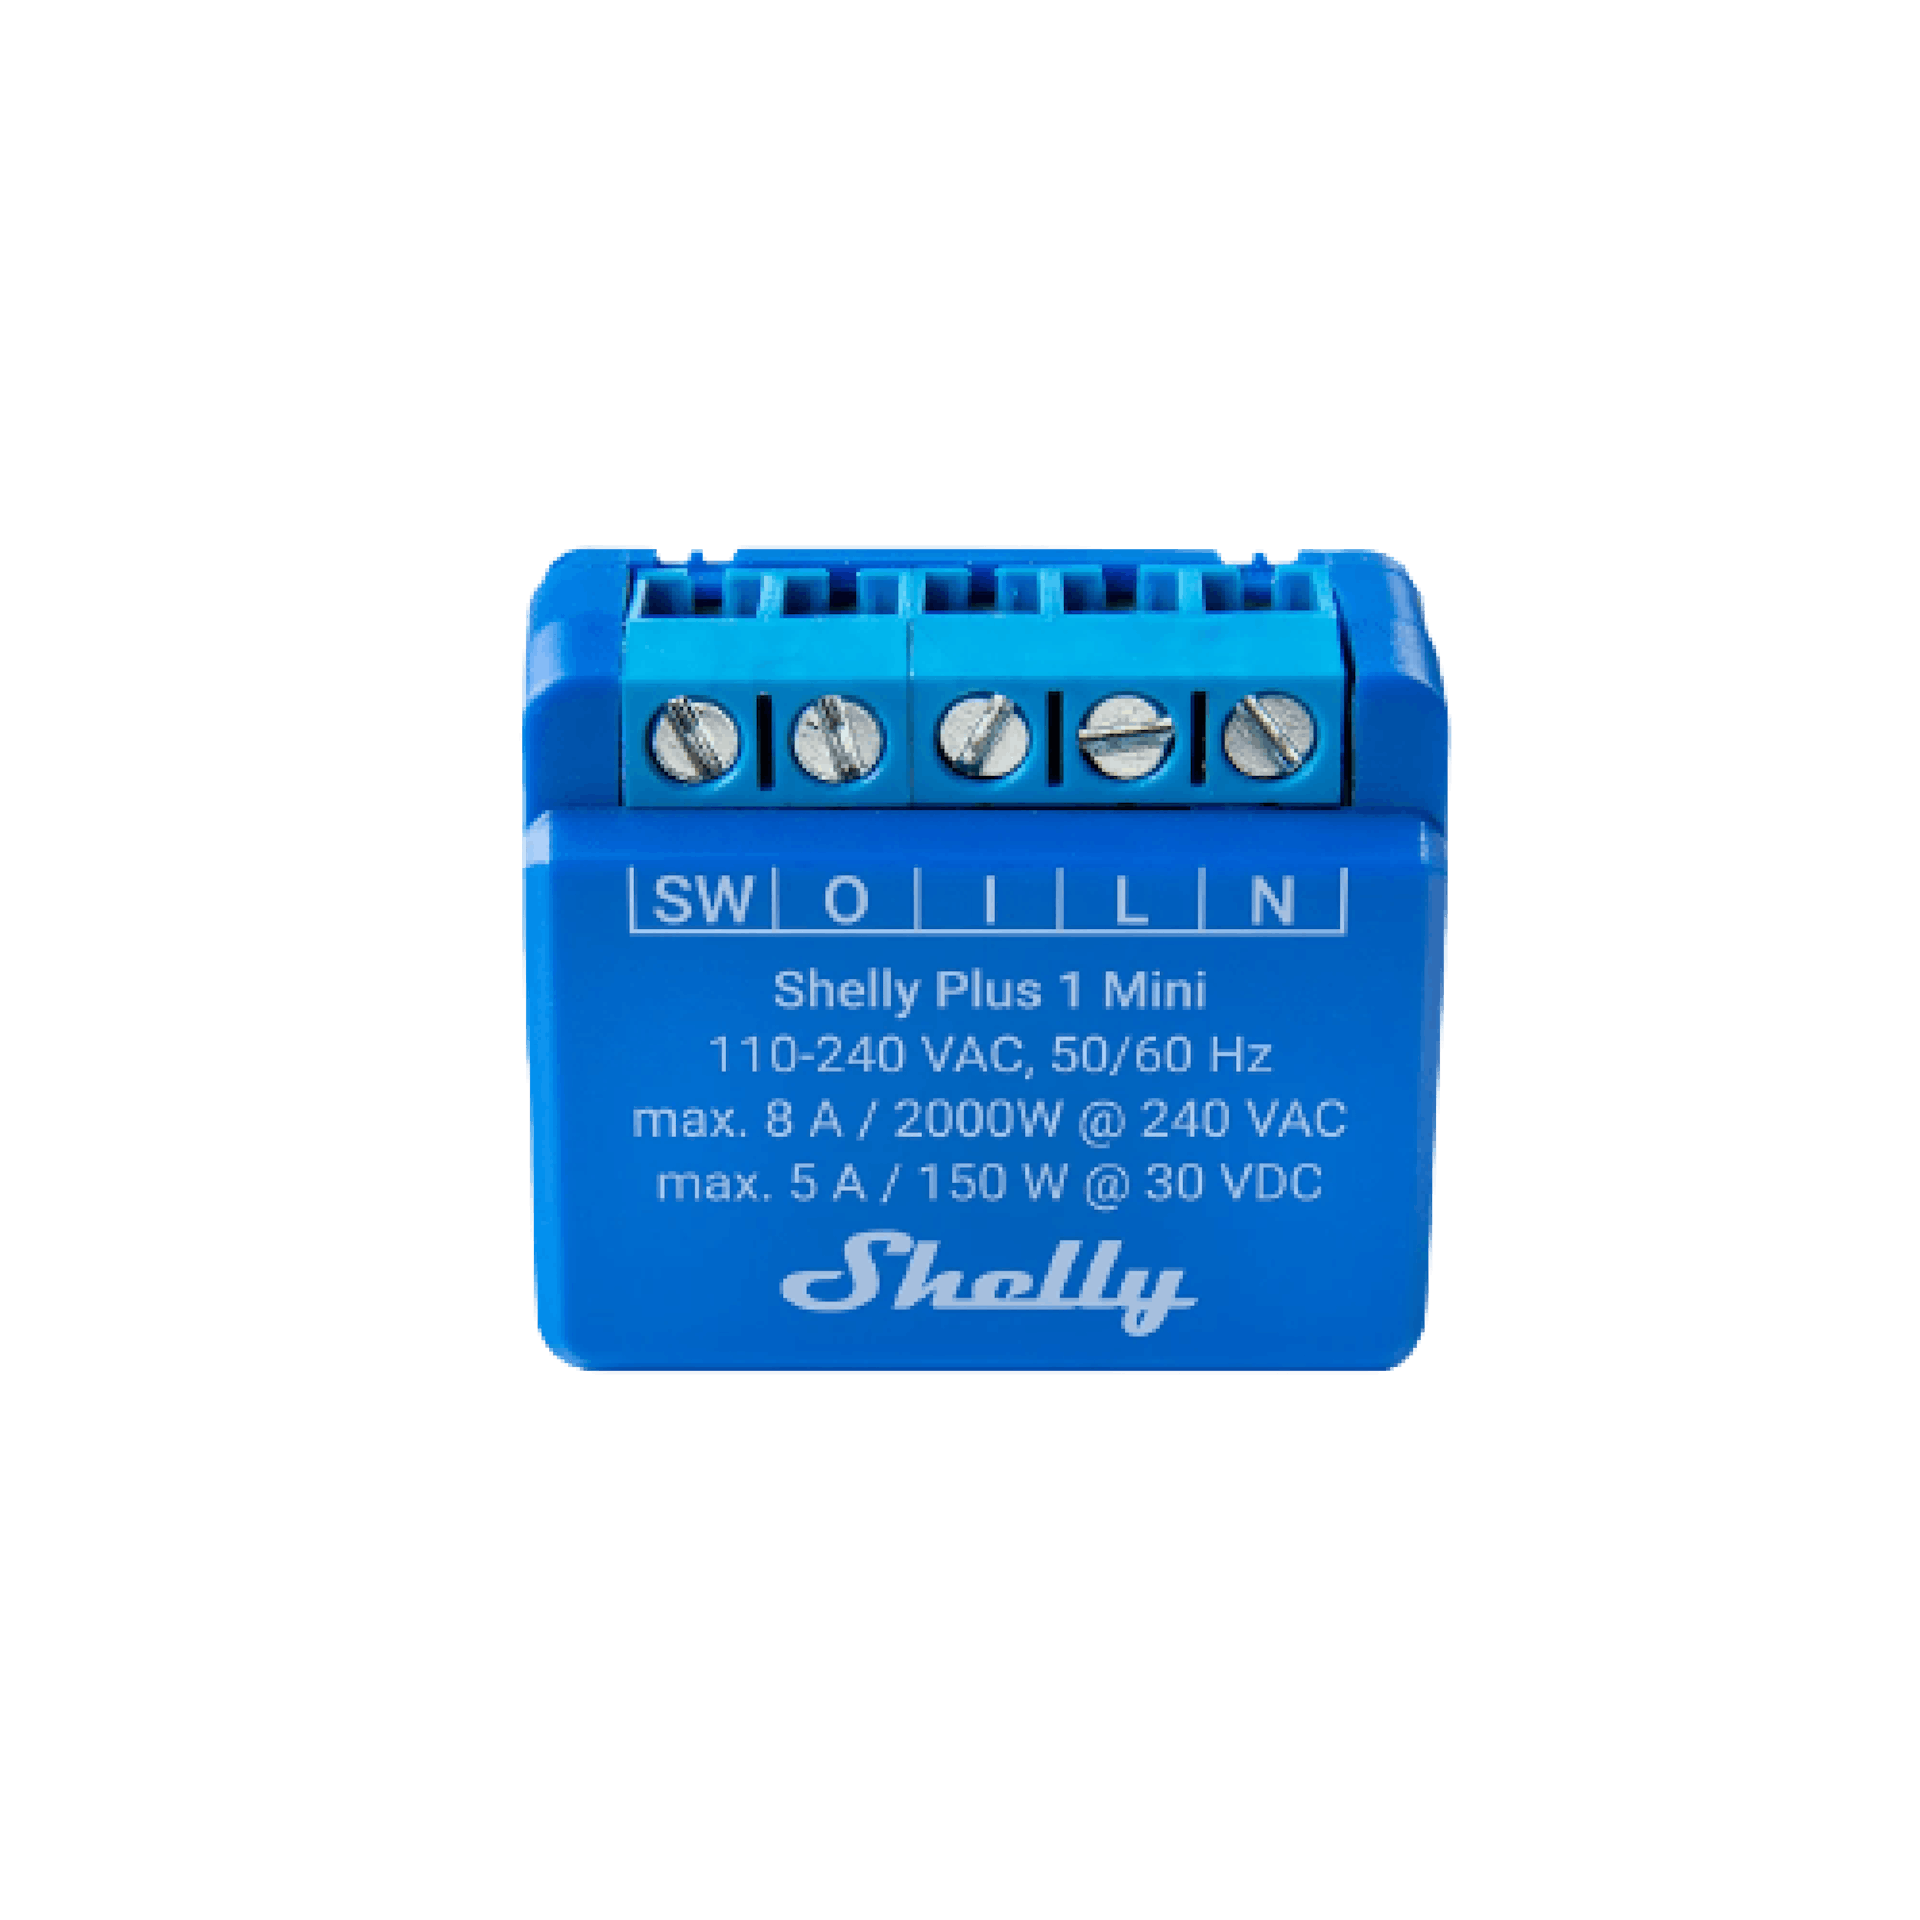 Shelly Plus 1 mini - Image Details